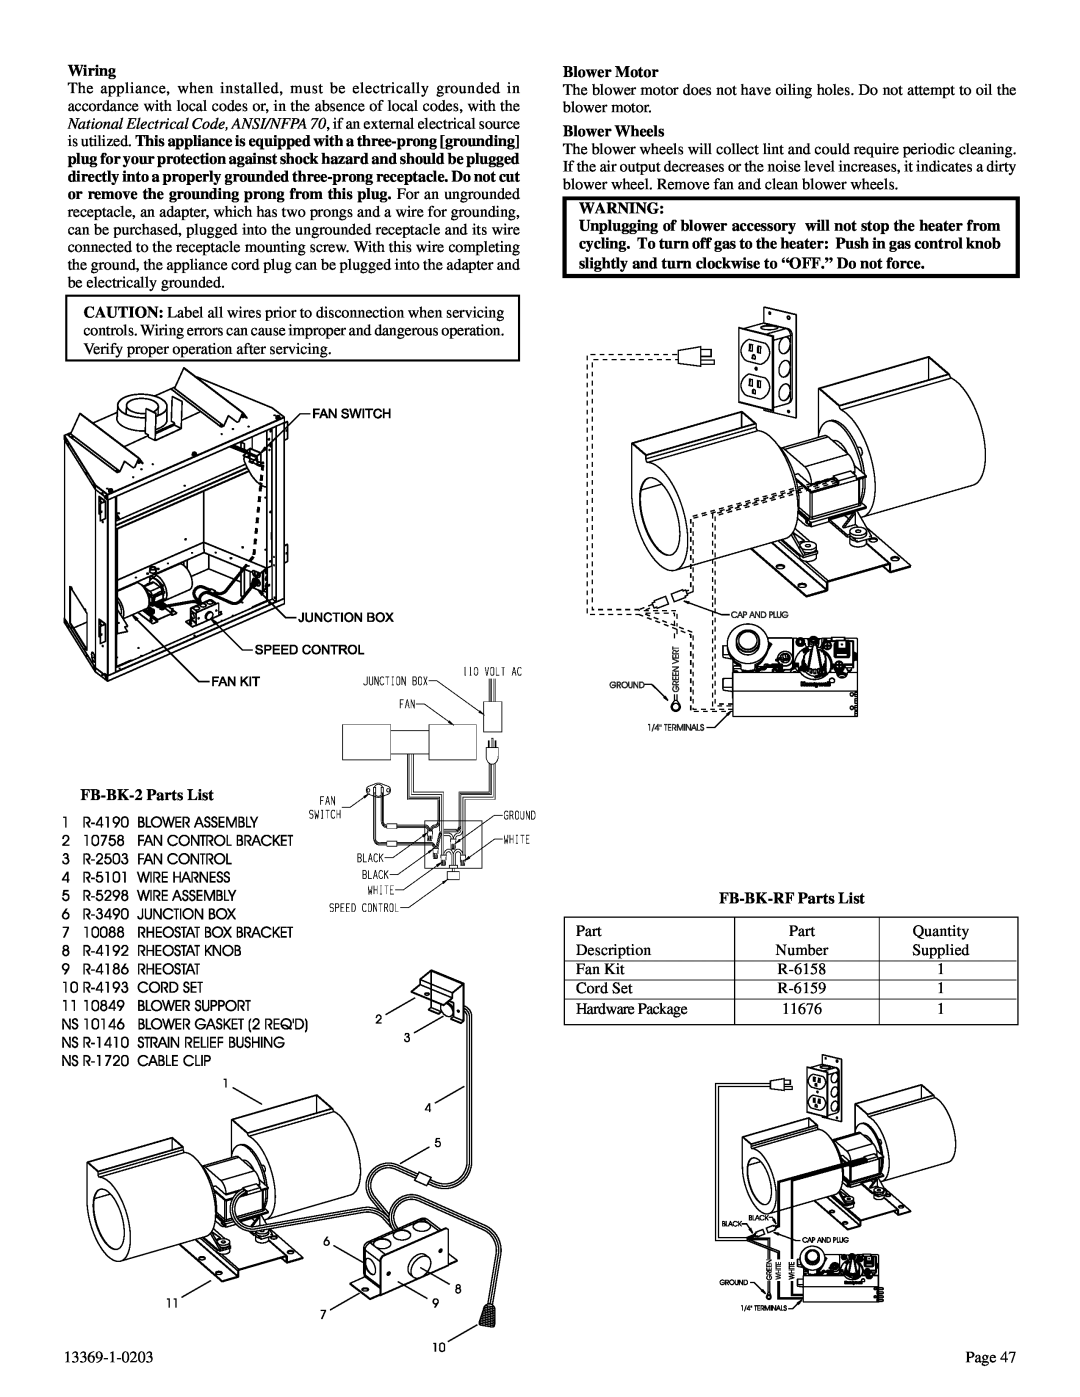 DVS 30-2 installation instructions Wiring, Blower Motor, Blower Wheels, FB-BK-2Parts List FB-BK-RFParts List 